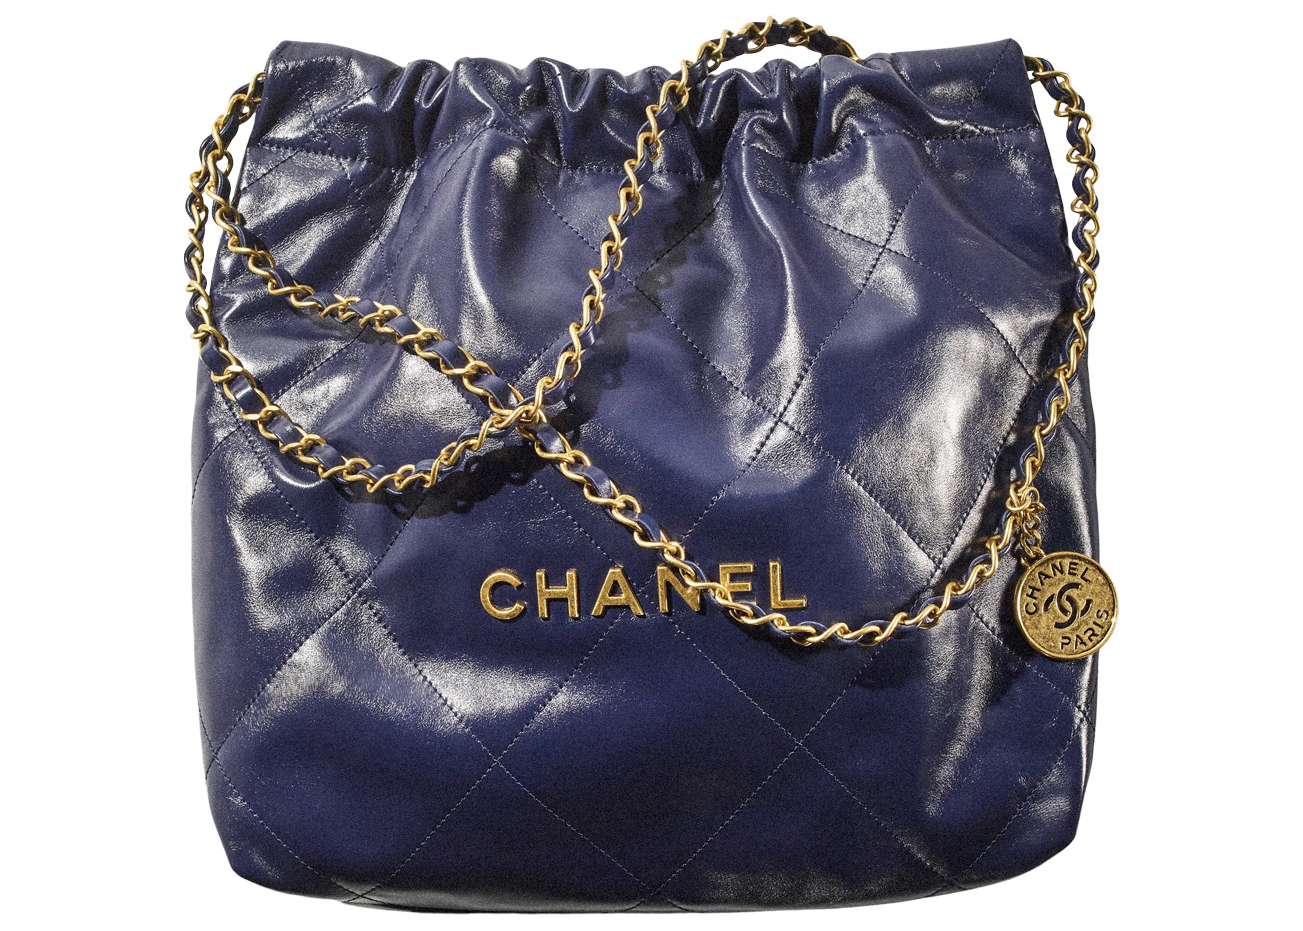 CHANEL Chanel 22 Small Tote Handbag in 22A Grey Calfskin  Dearluxe